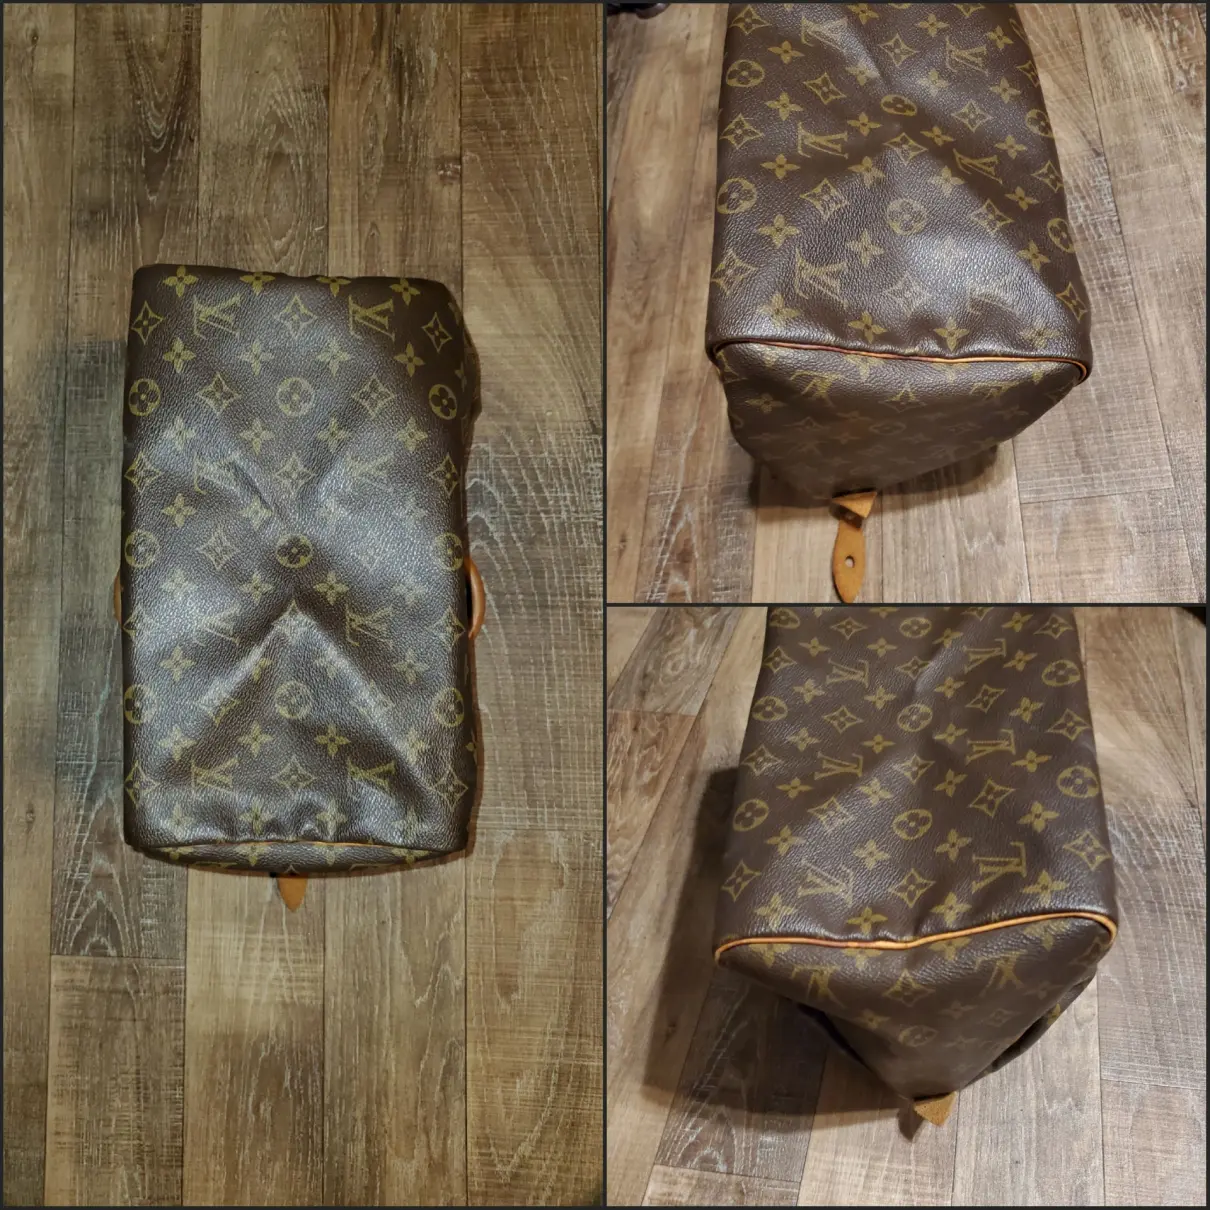 Speedy leather satchel Louis Vuitton - Vintage